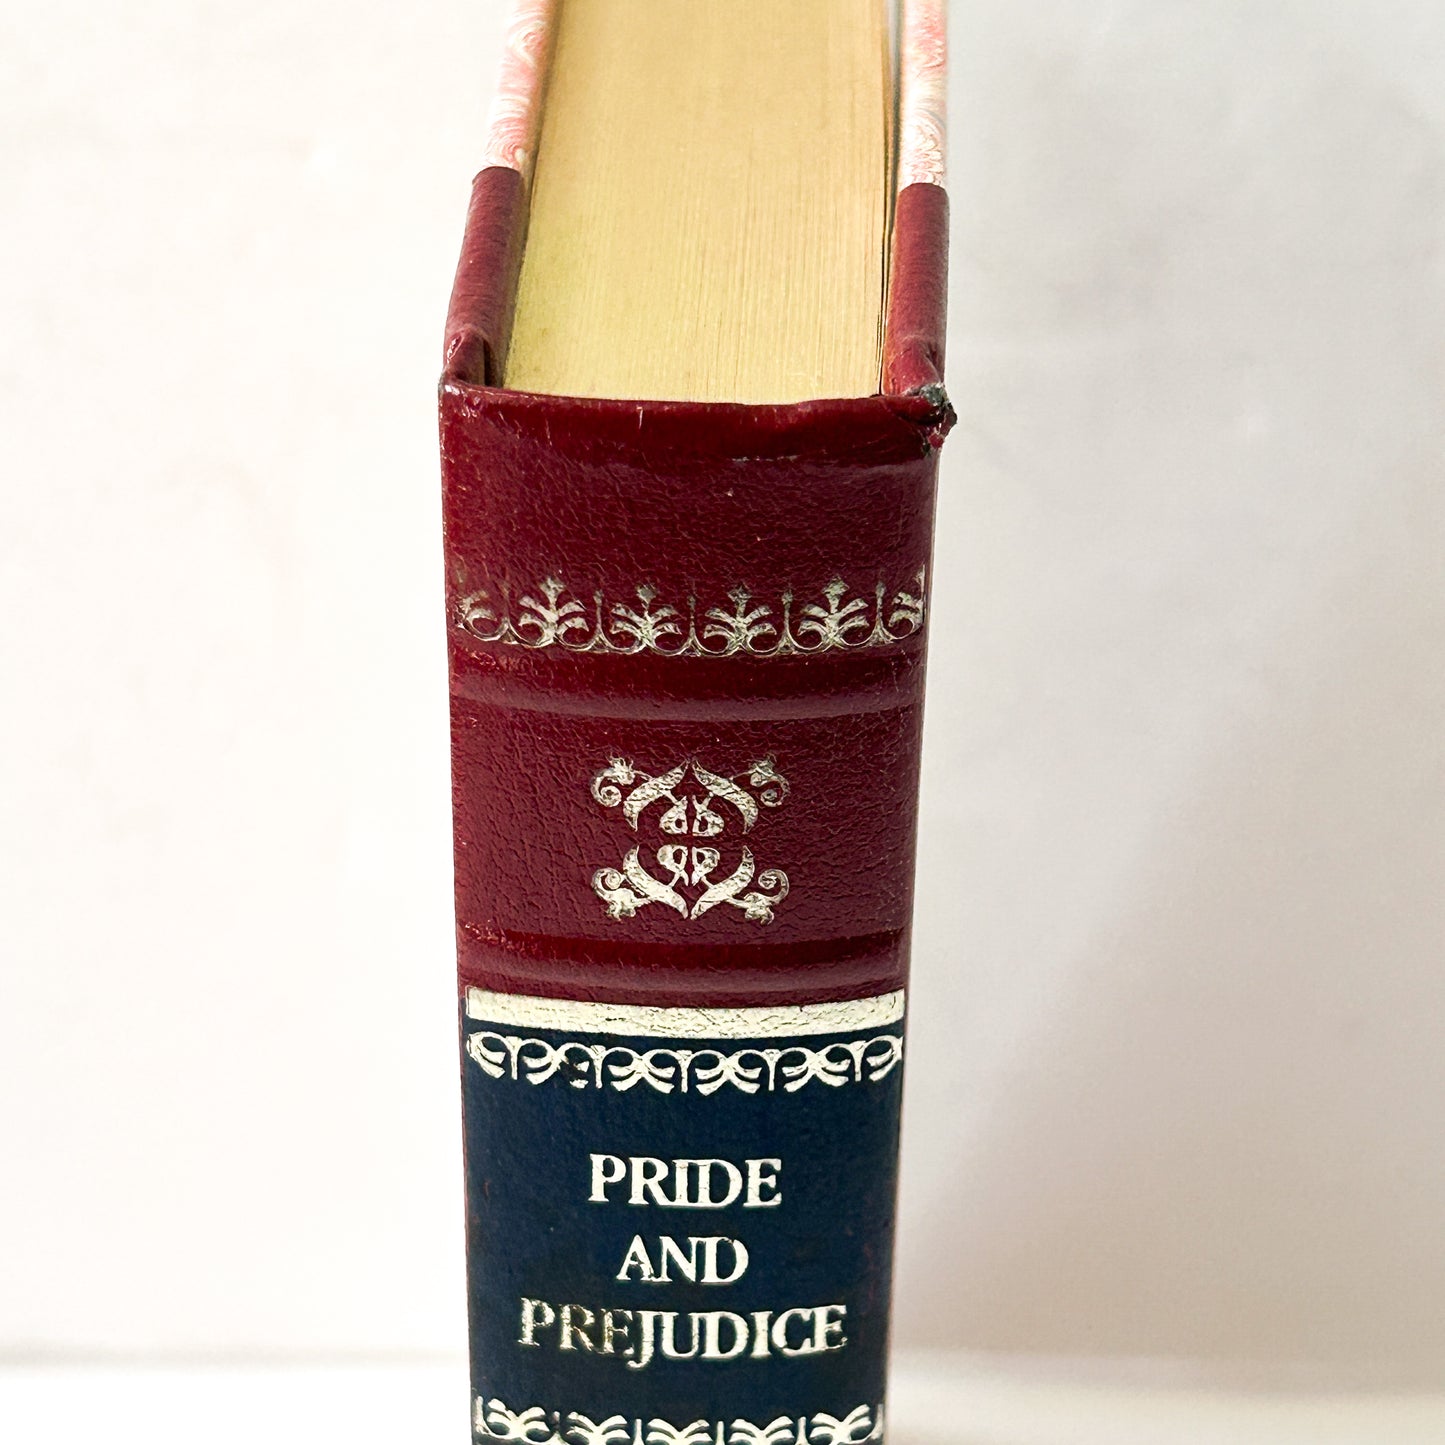 Pride and Prejudice by Jane Austen, Vintage Chatham River Press Edition